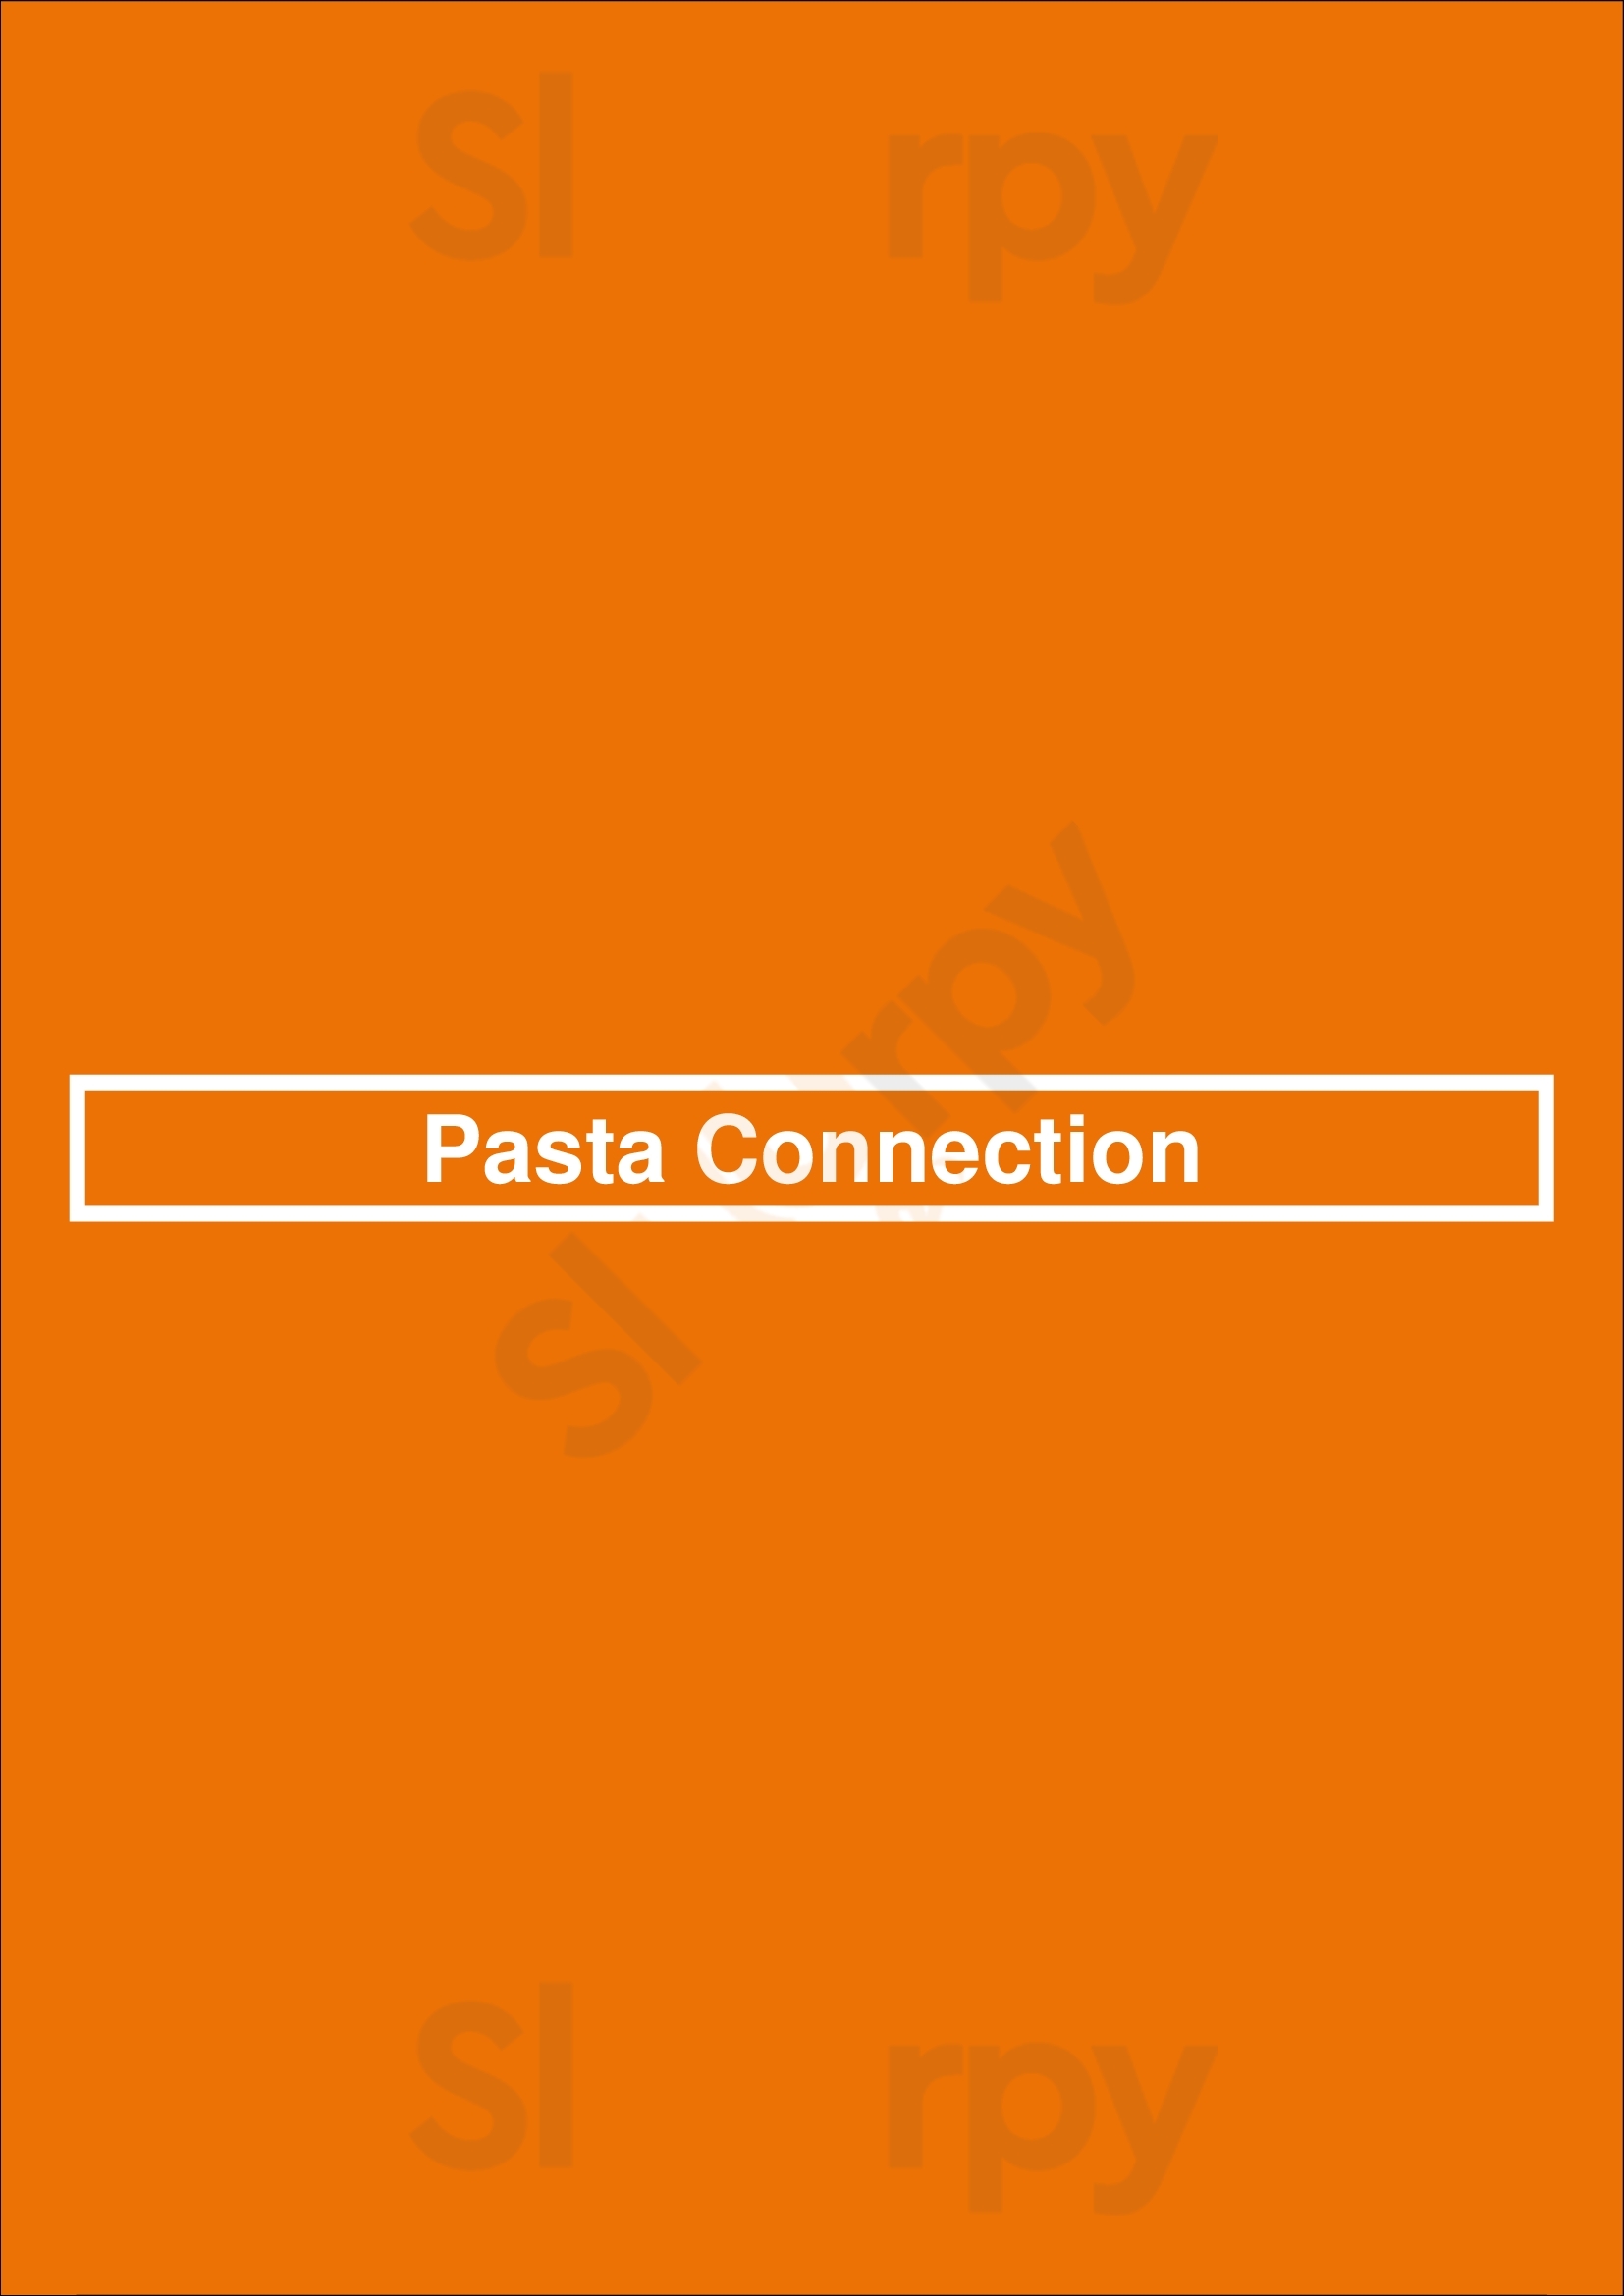 Pasta Connection Costa Mesa Menu - 1